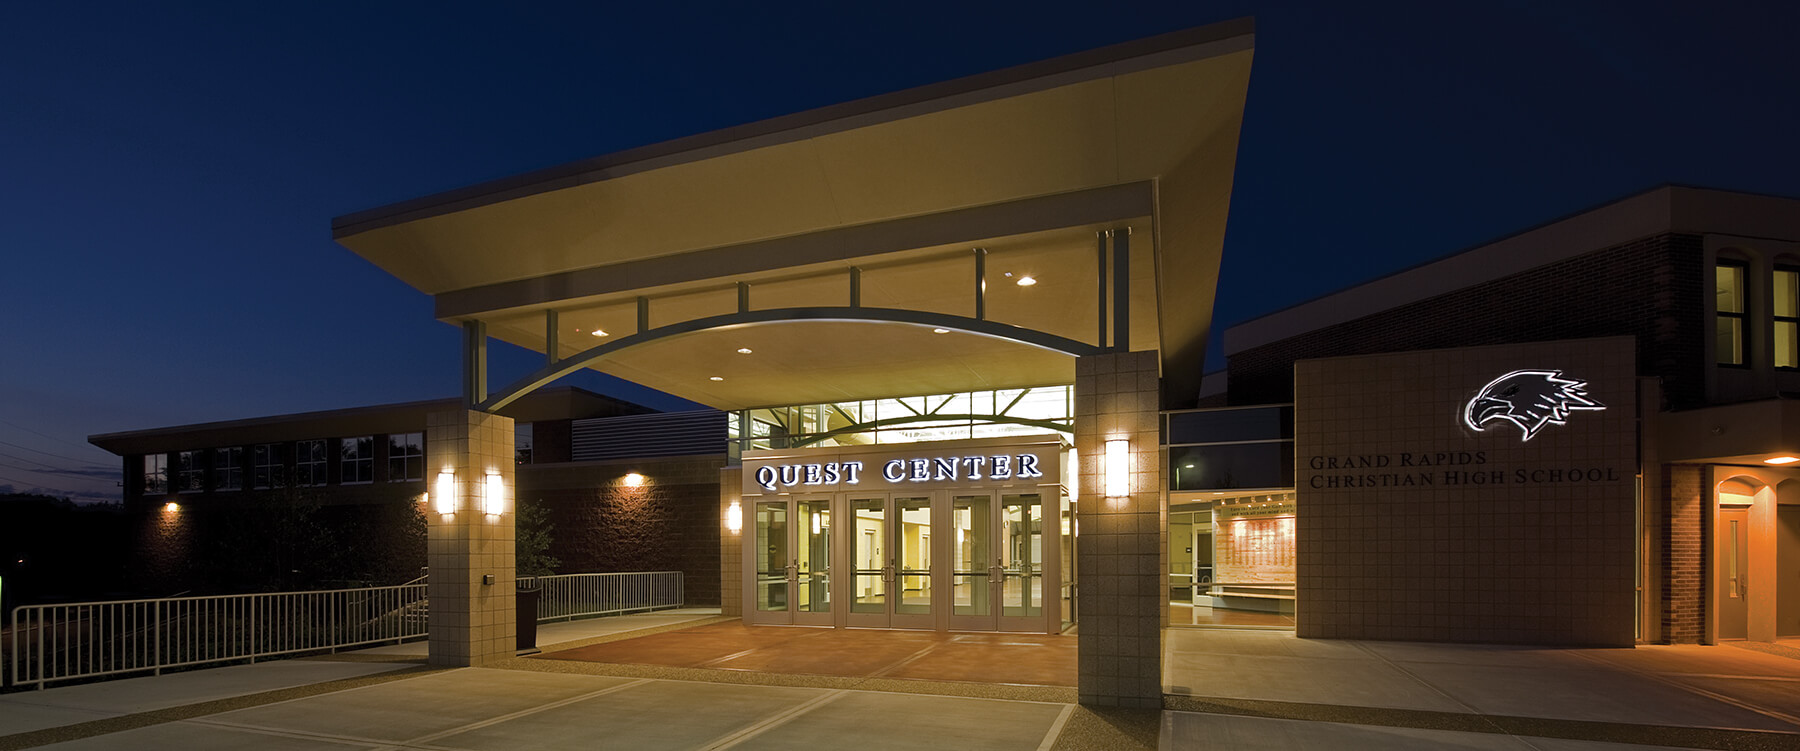 GRCHS Quest Center at dusk